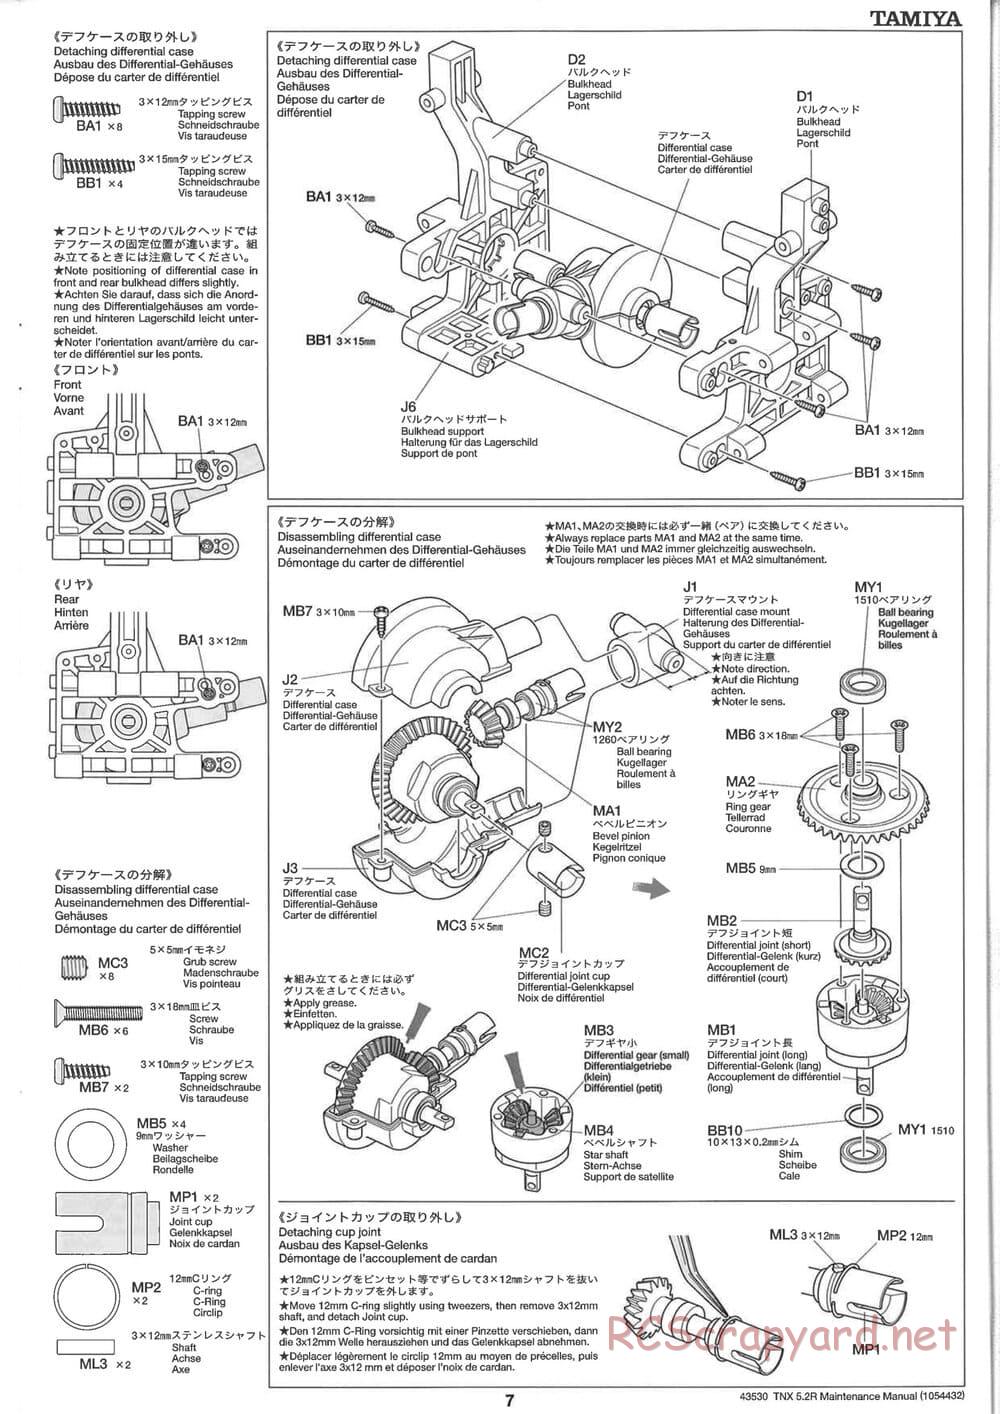 Tamiya - TNX 5.2R - TGM-04 - Maintenance Manual - Page 7